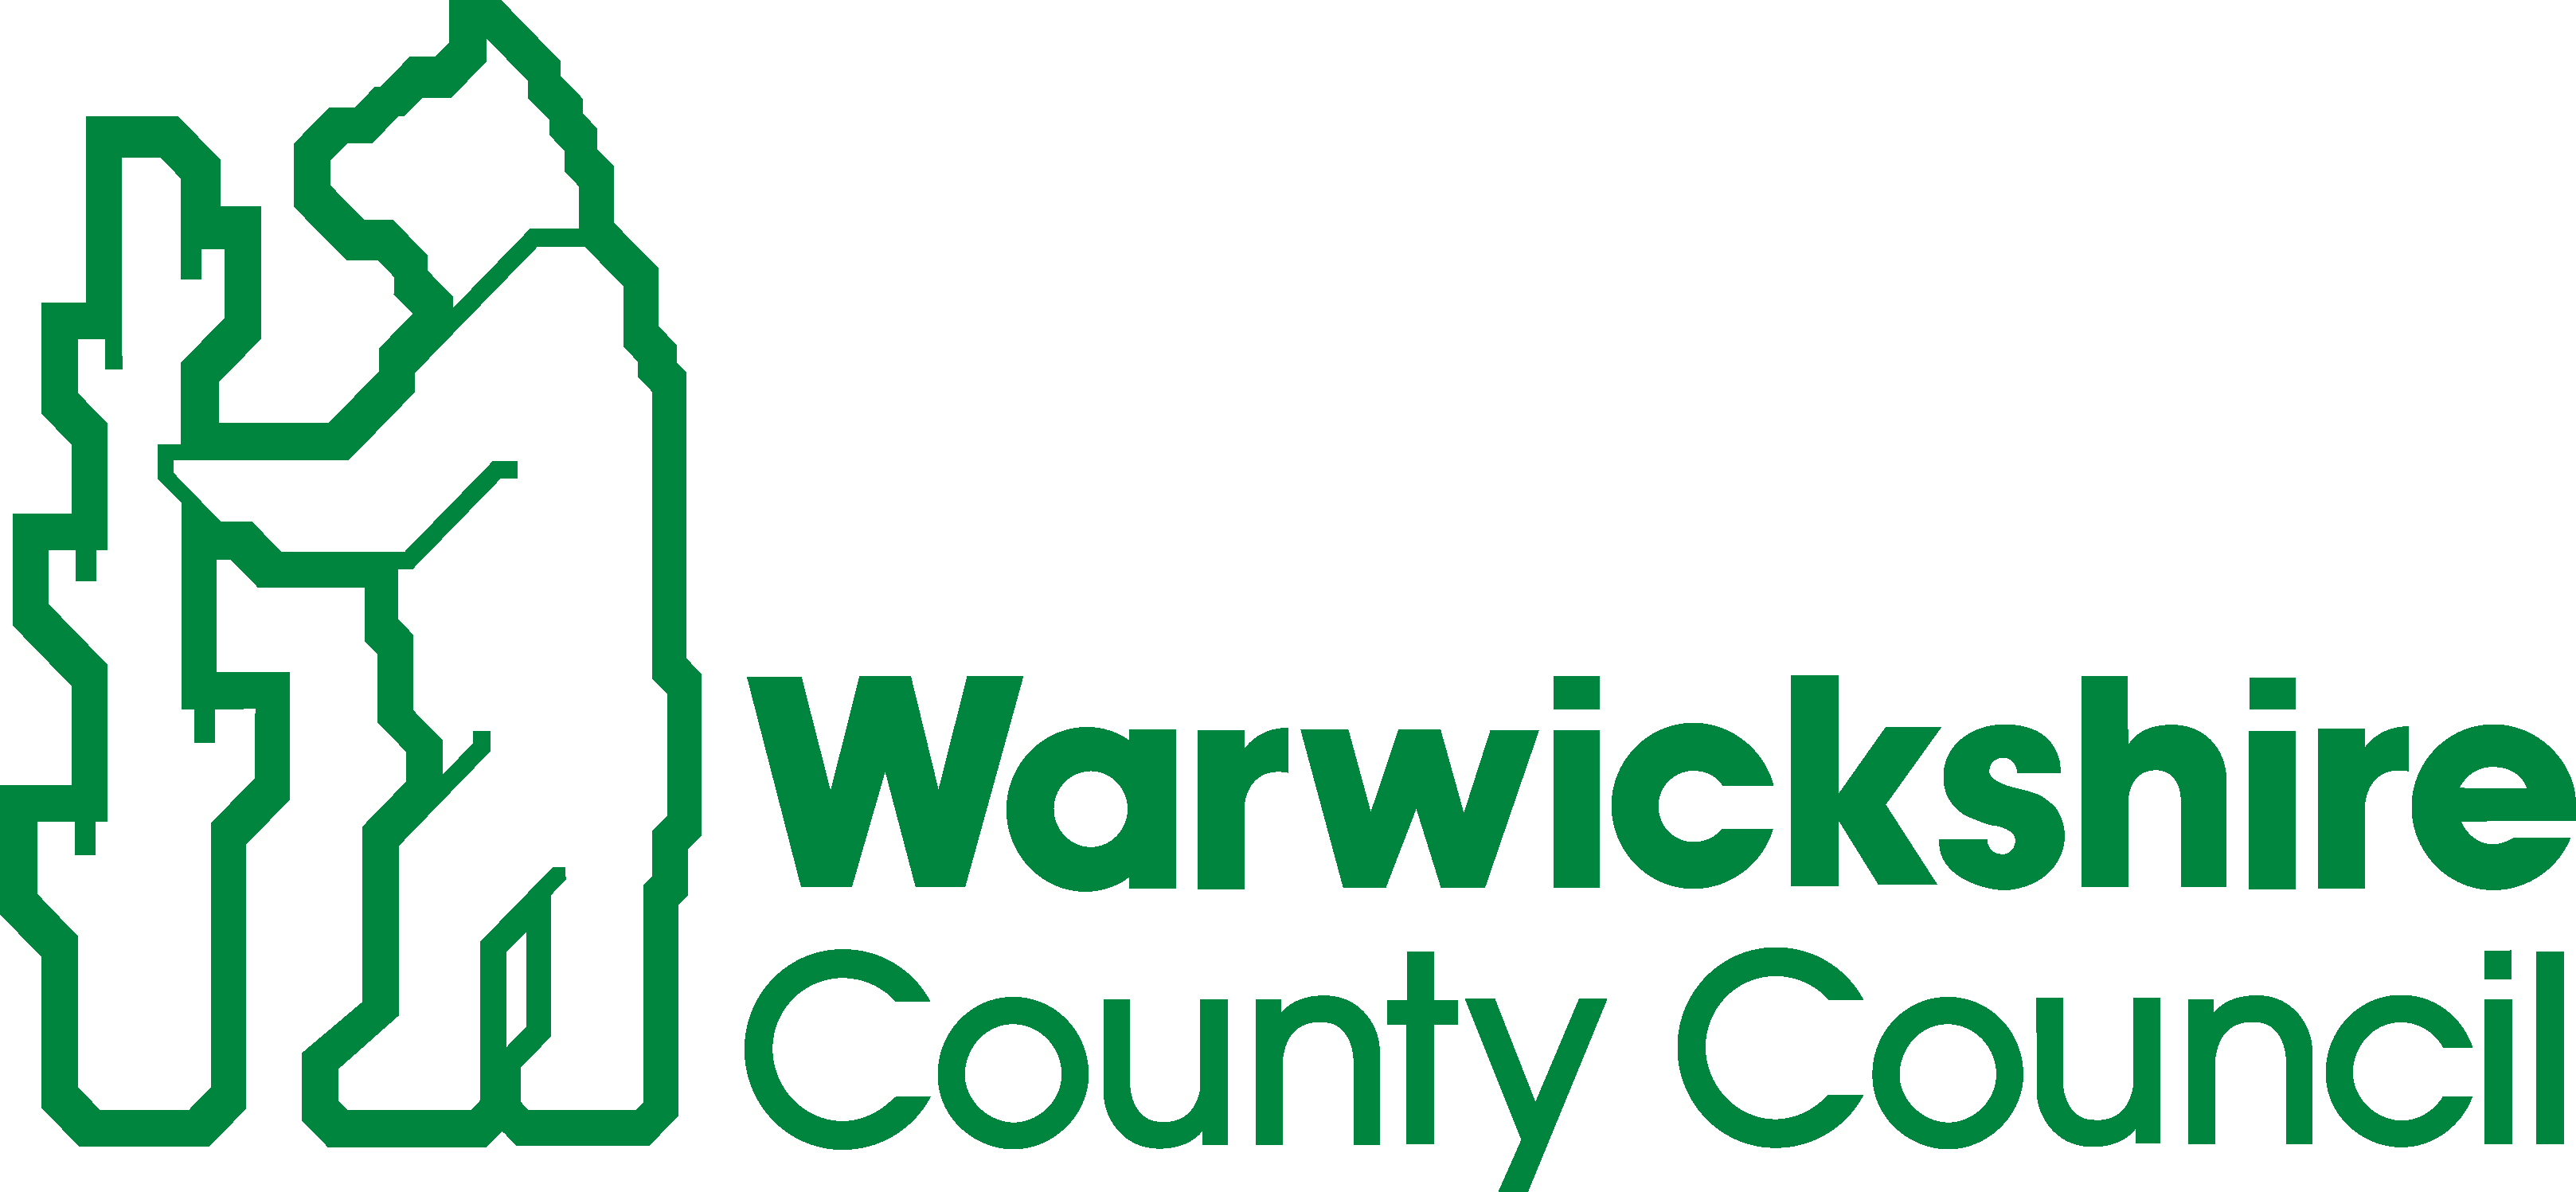 Warwickshire County Council logo.